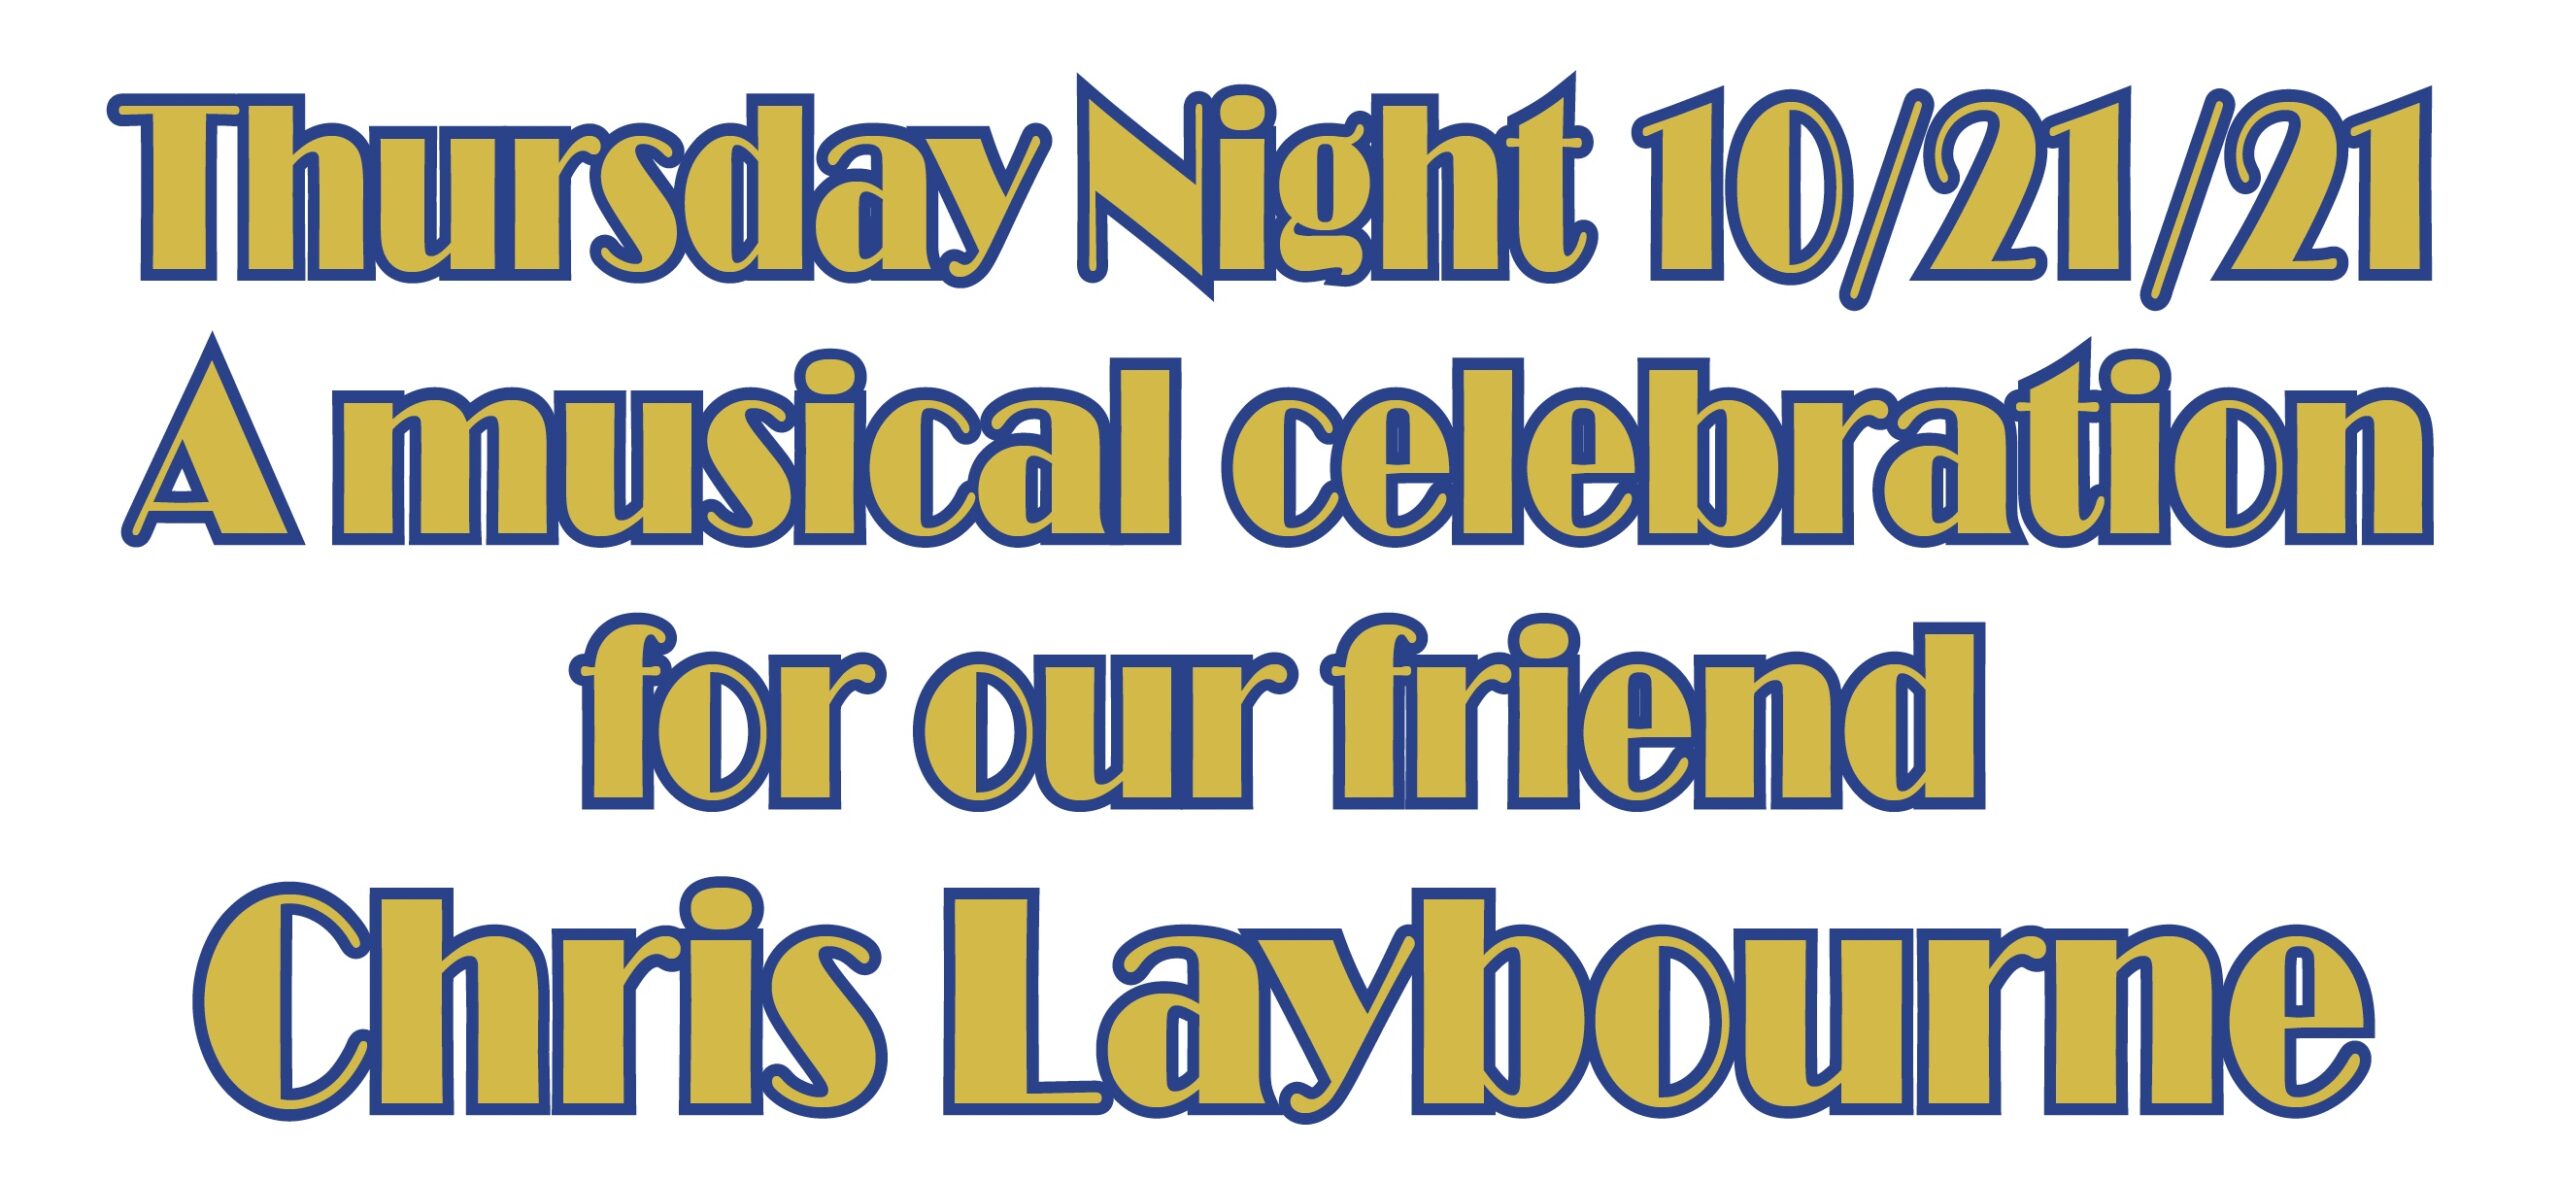 The Chris Laybourne Celebration - Special Thursday